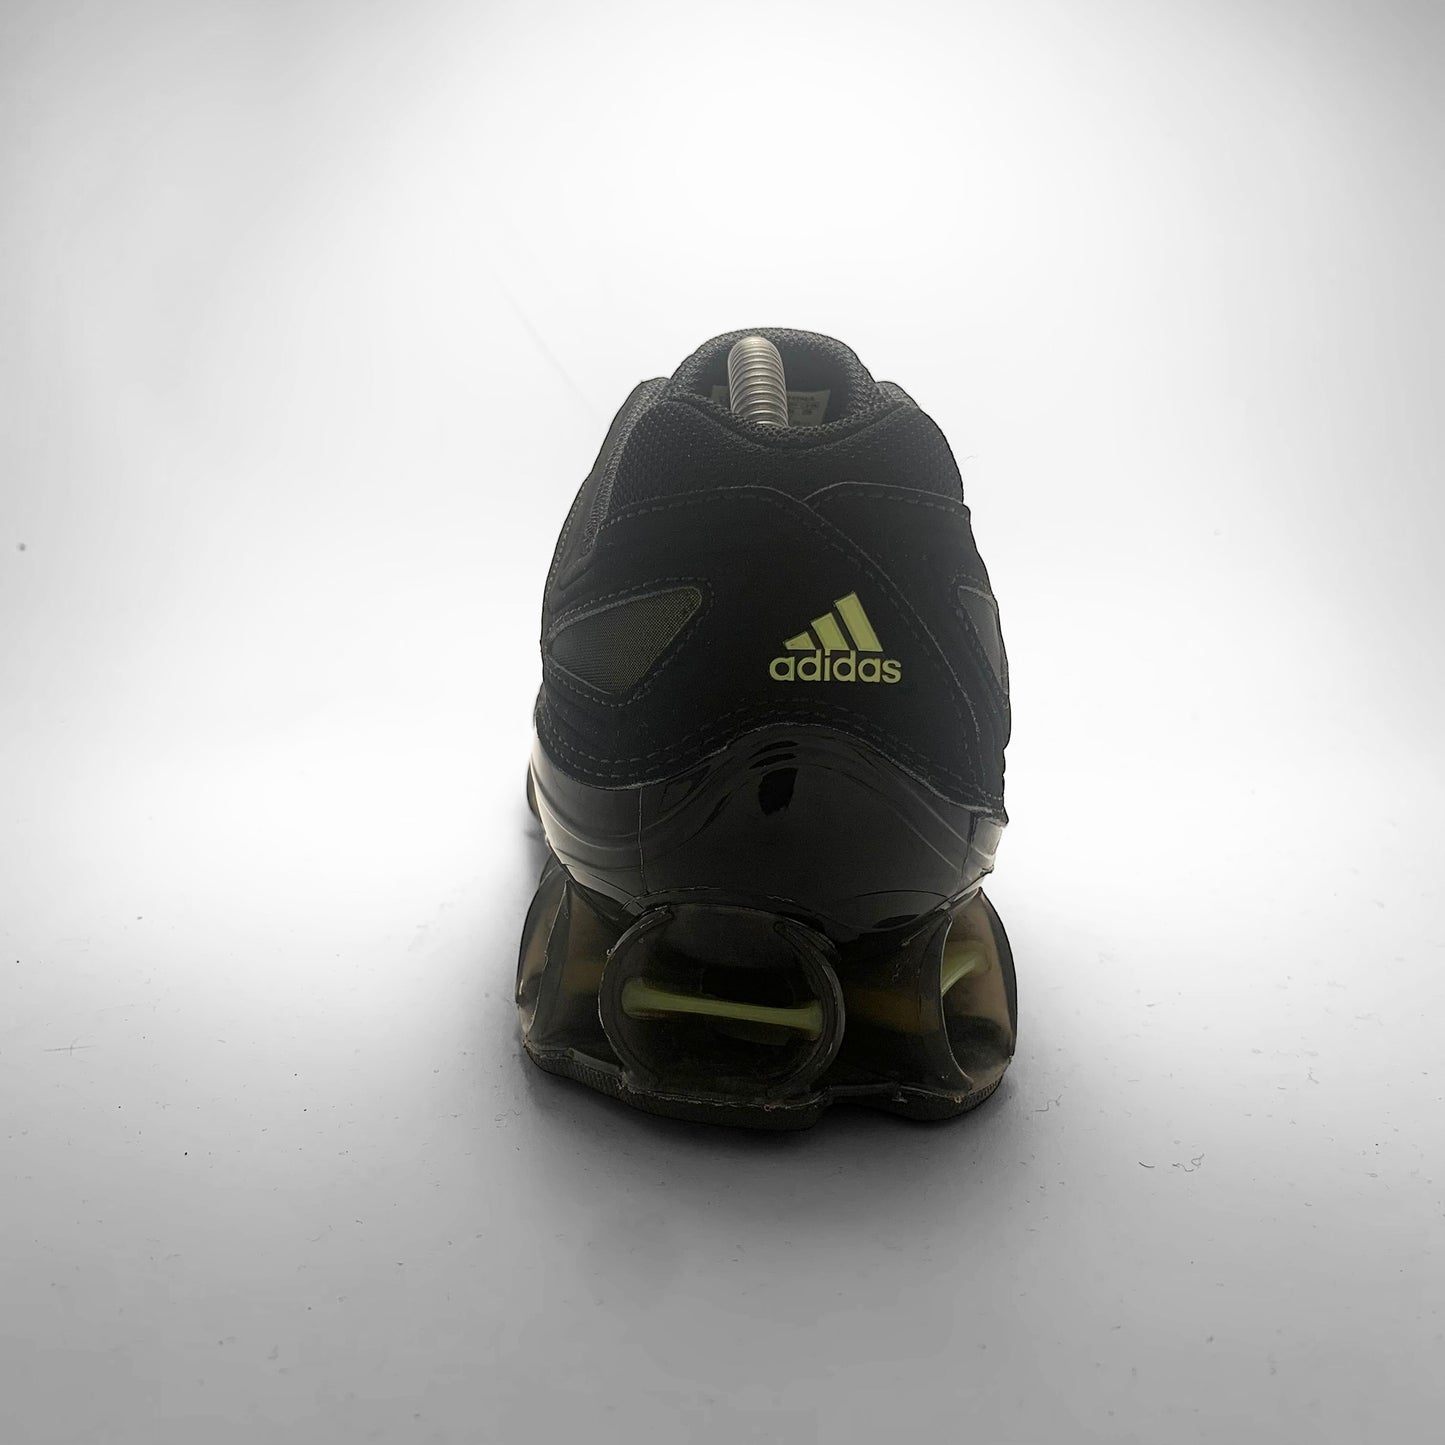 Adidas Ambition PB 3M (2010)